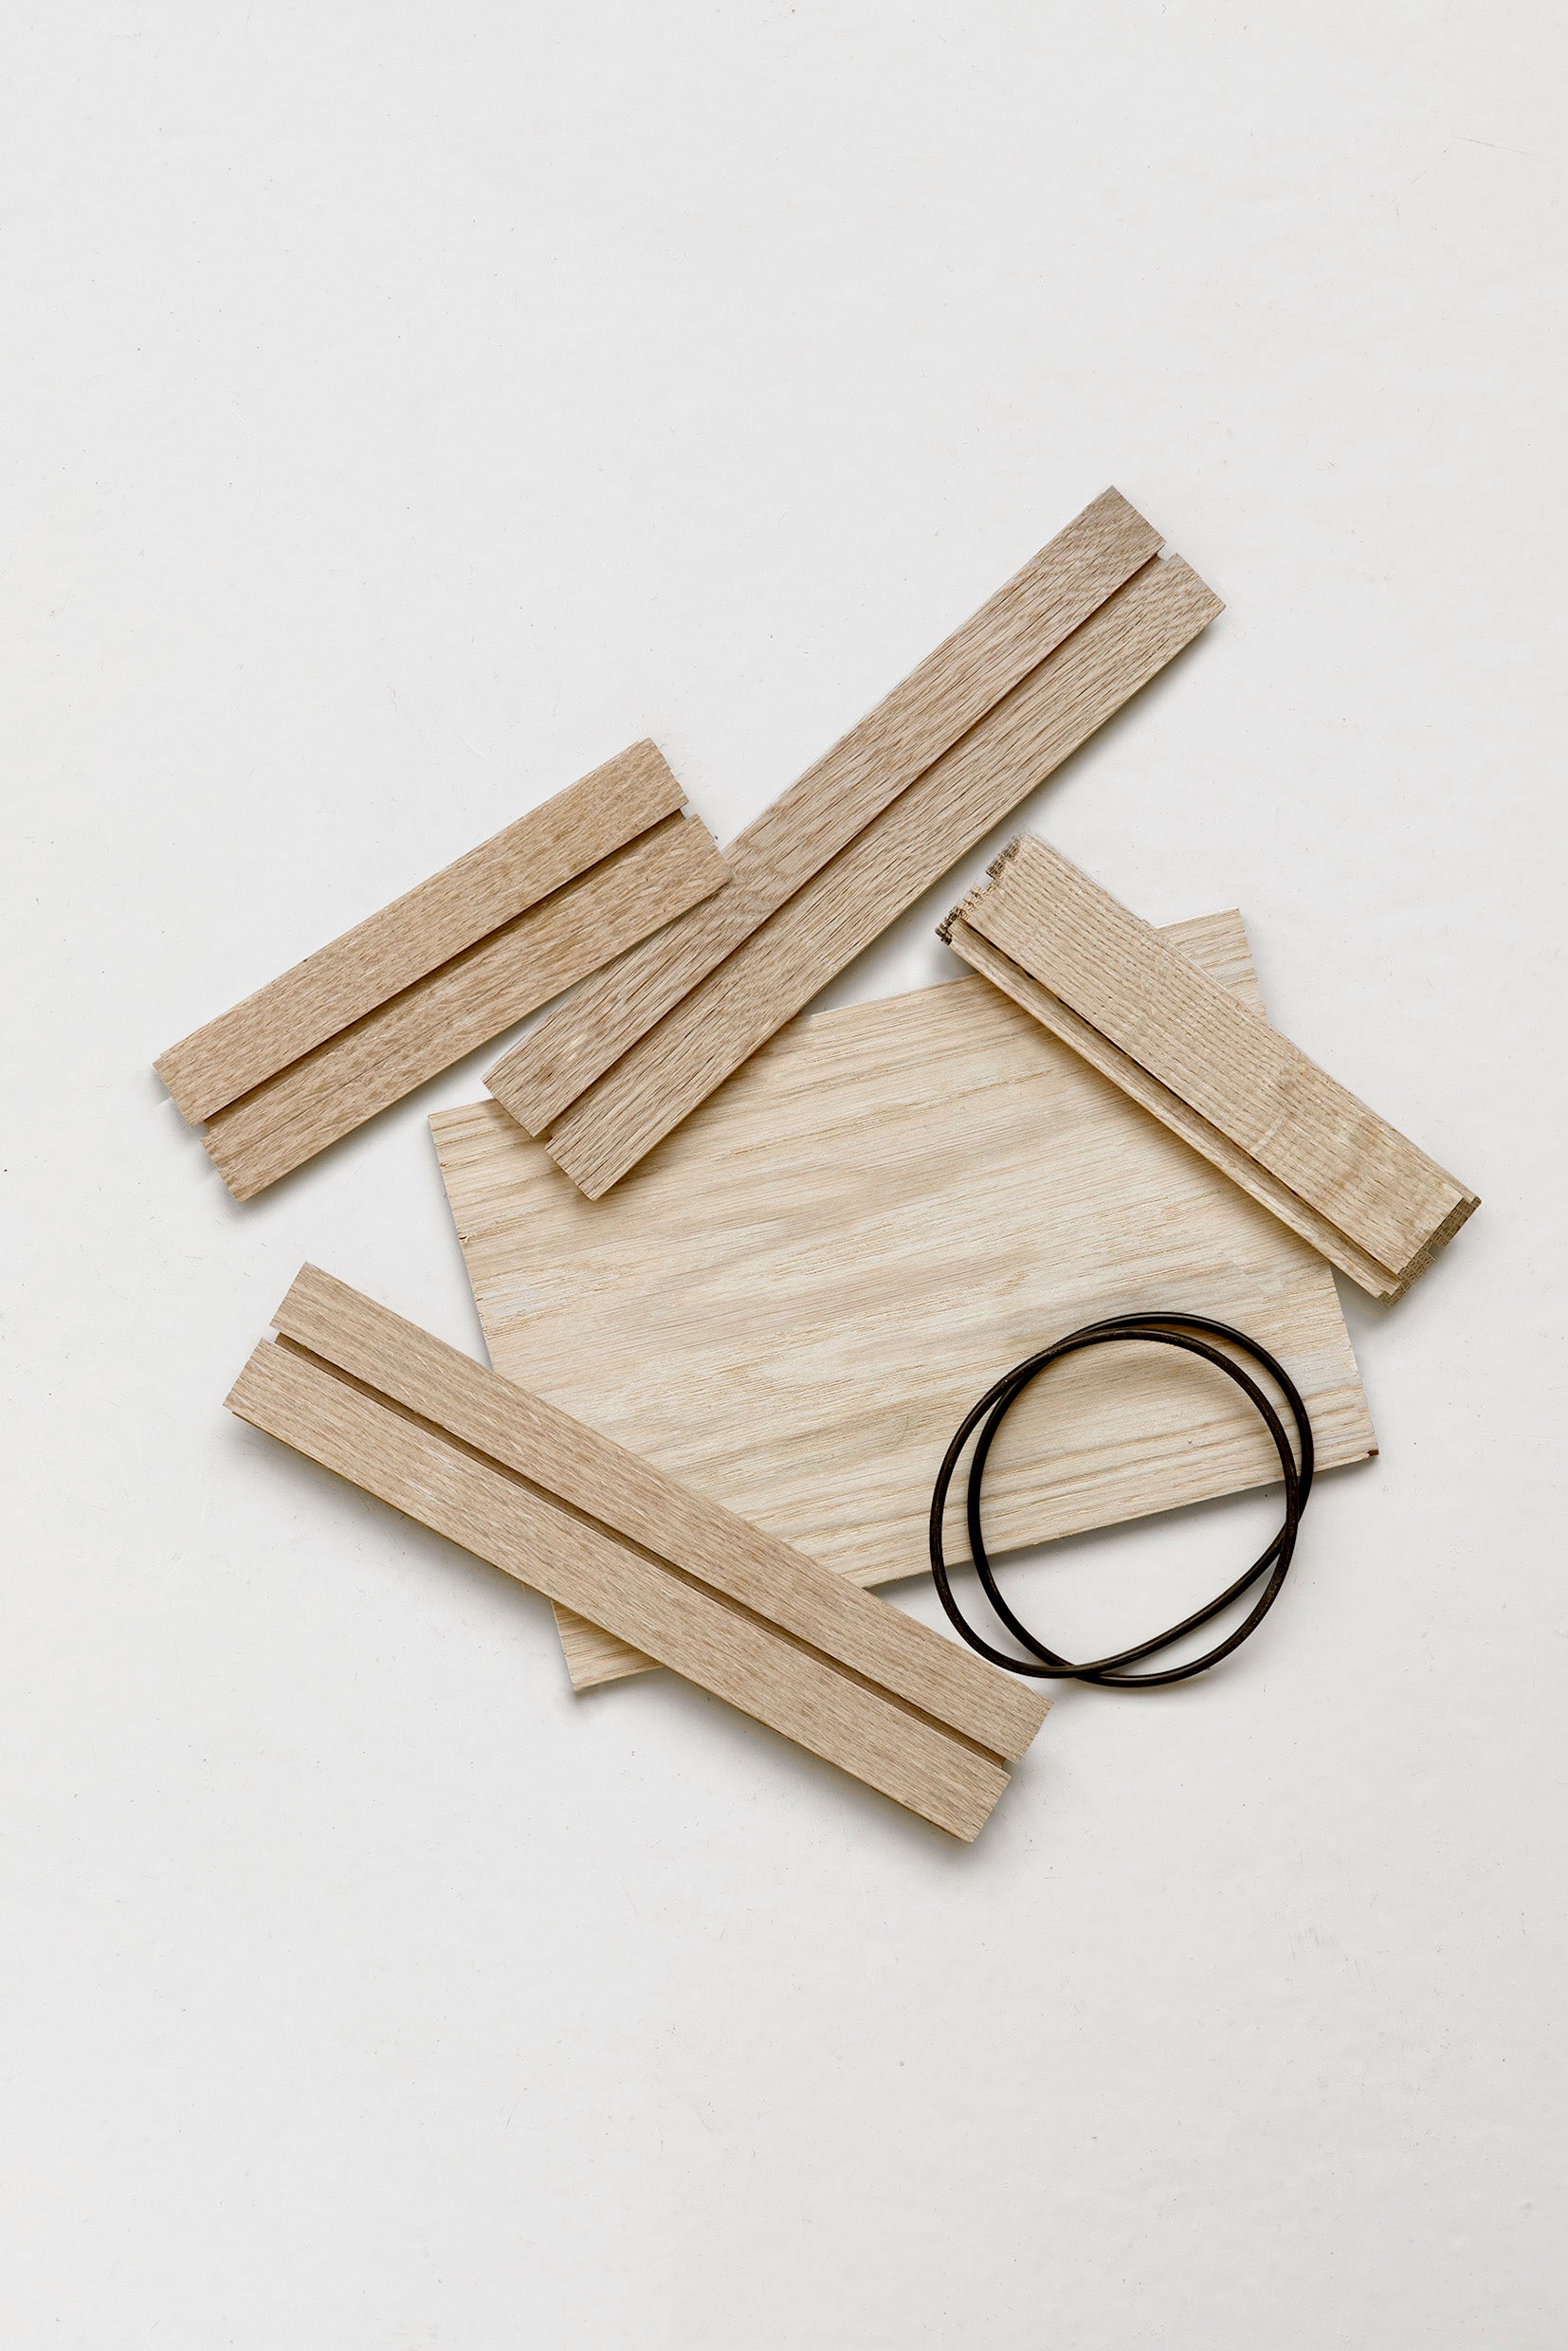 Functional and Sleek Wooden Tray | Organise | Small | by Moebe - Lifestory - Moebe